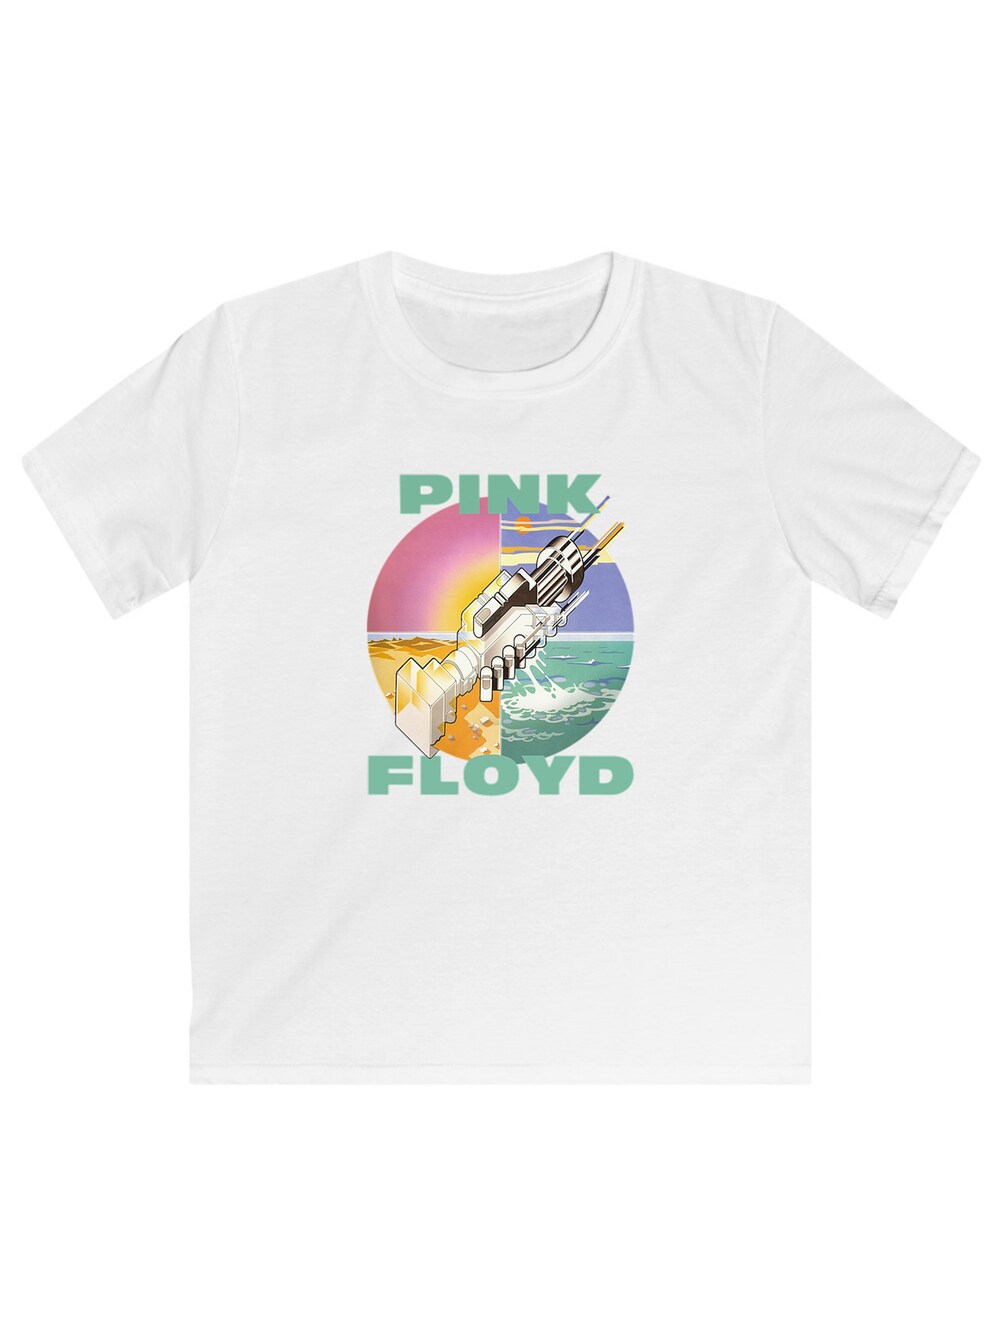 Рубашка F4Nt4Stic Pink Floyd Wish You Were Here, белый pink floyd wish you were here mini lp 2017 sony cd japan компакт диск 1шт rick wright